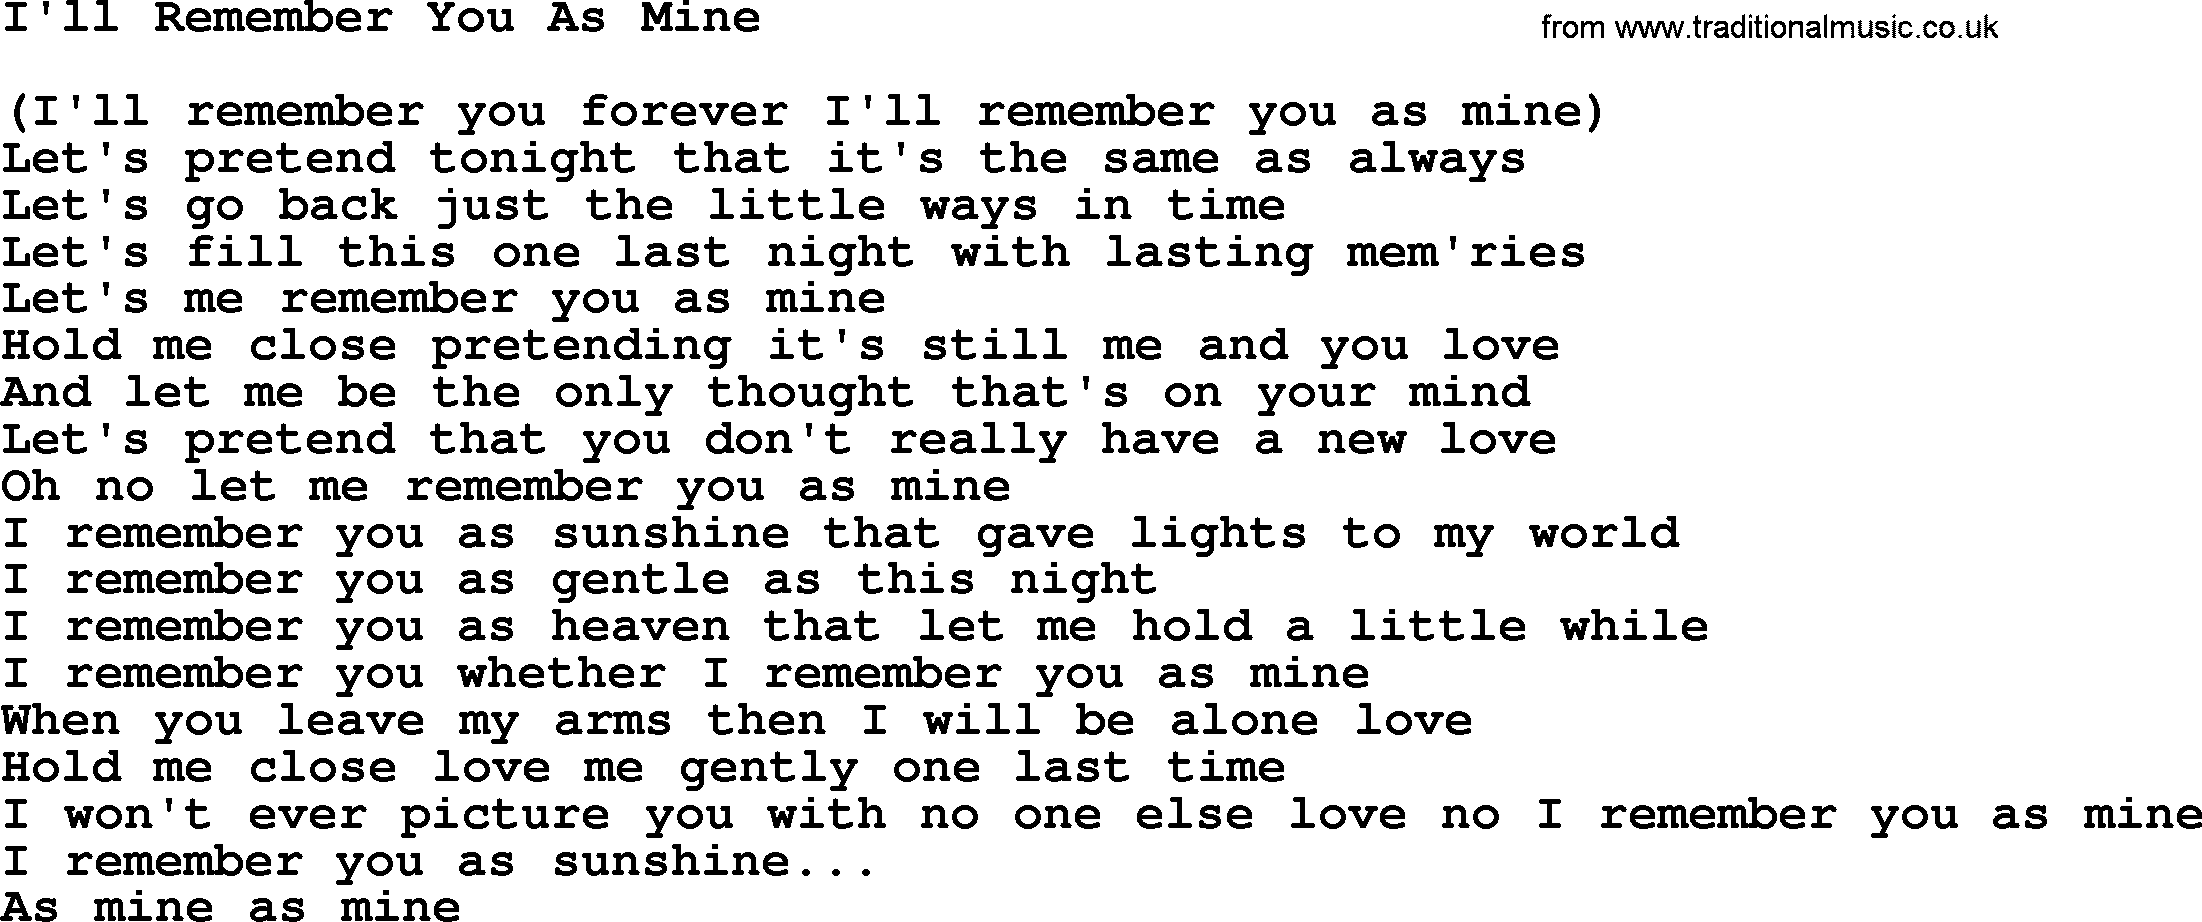 Dolly Parton song I'll Remember You As Mine.txt lyrics